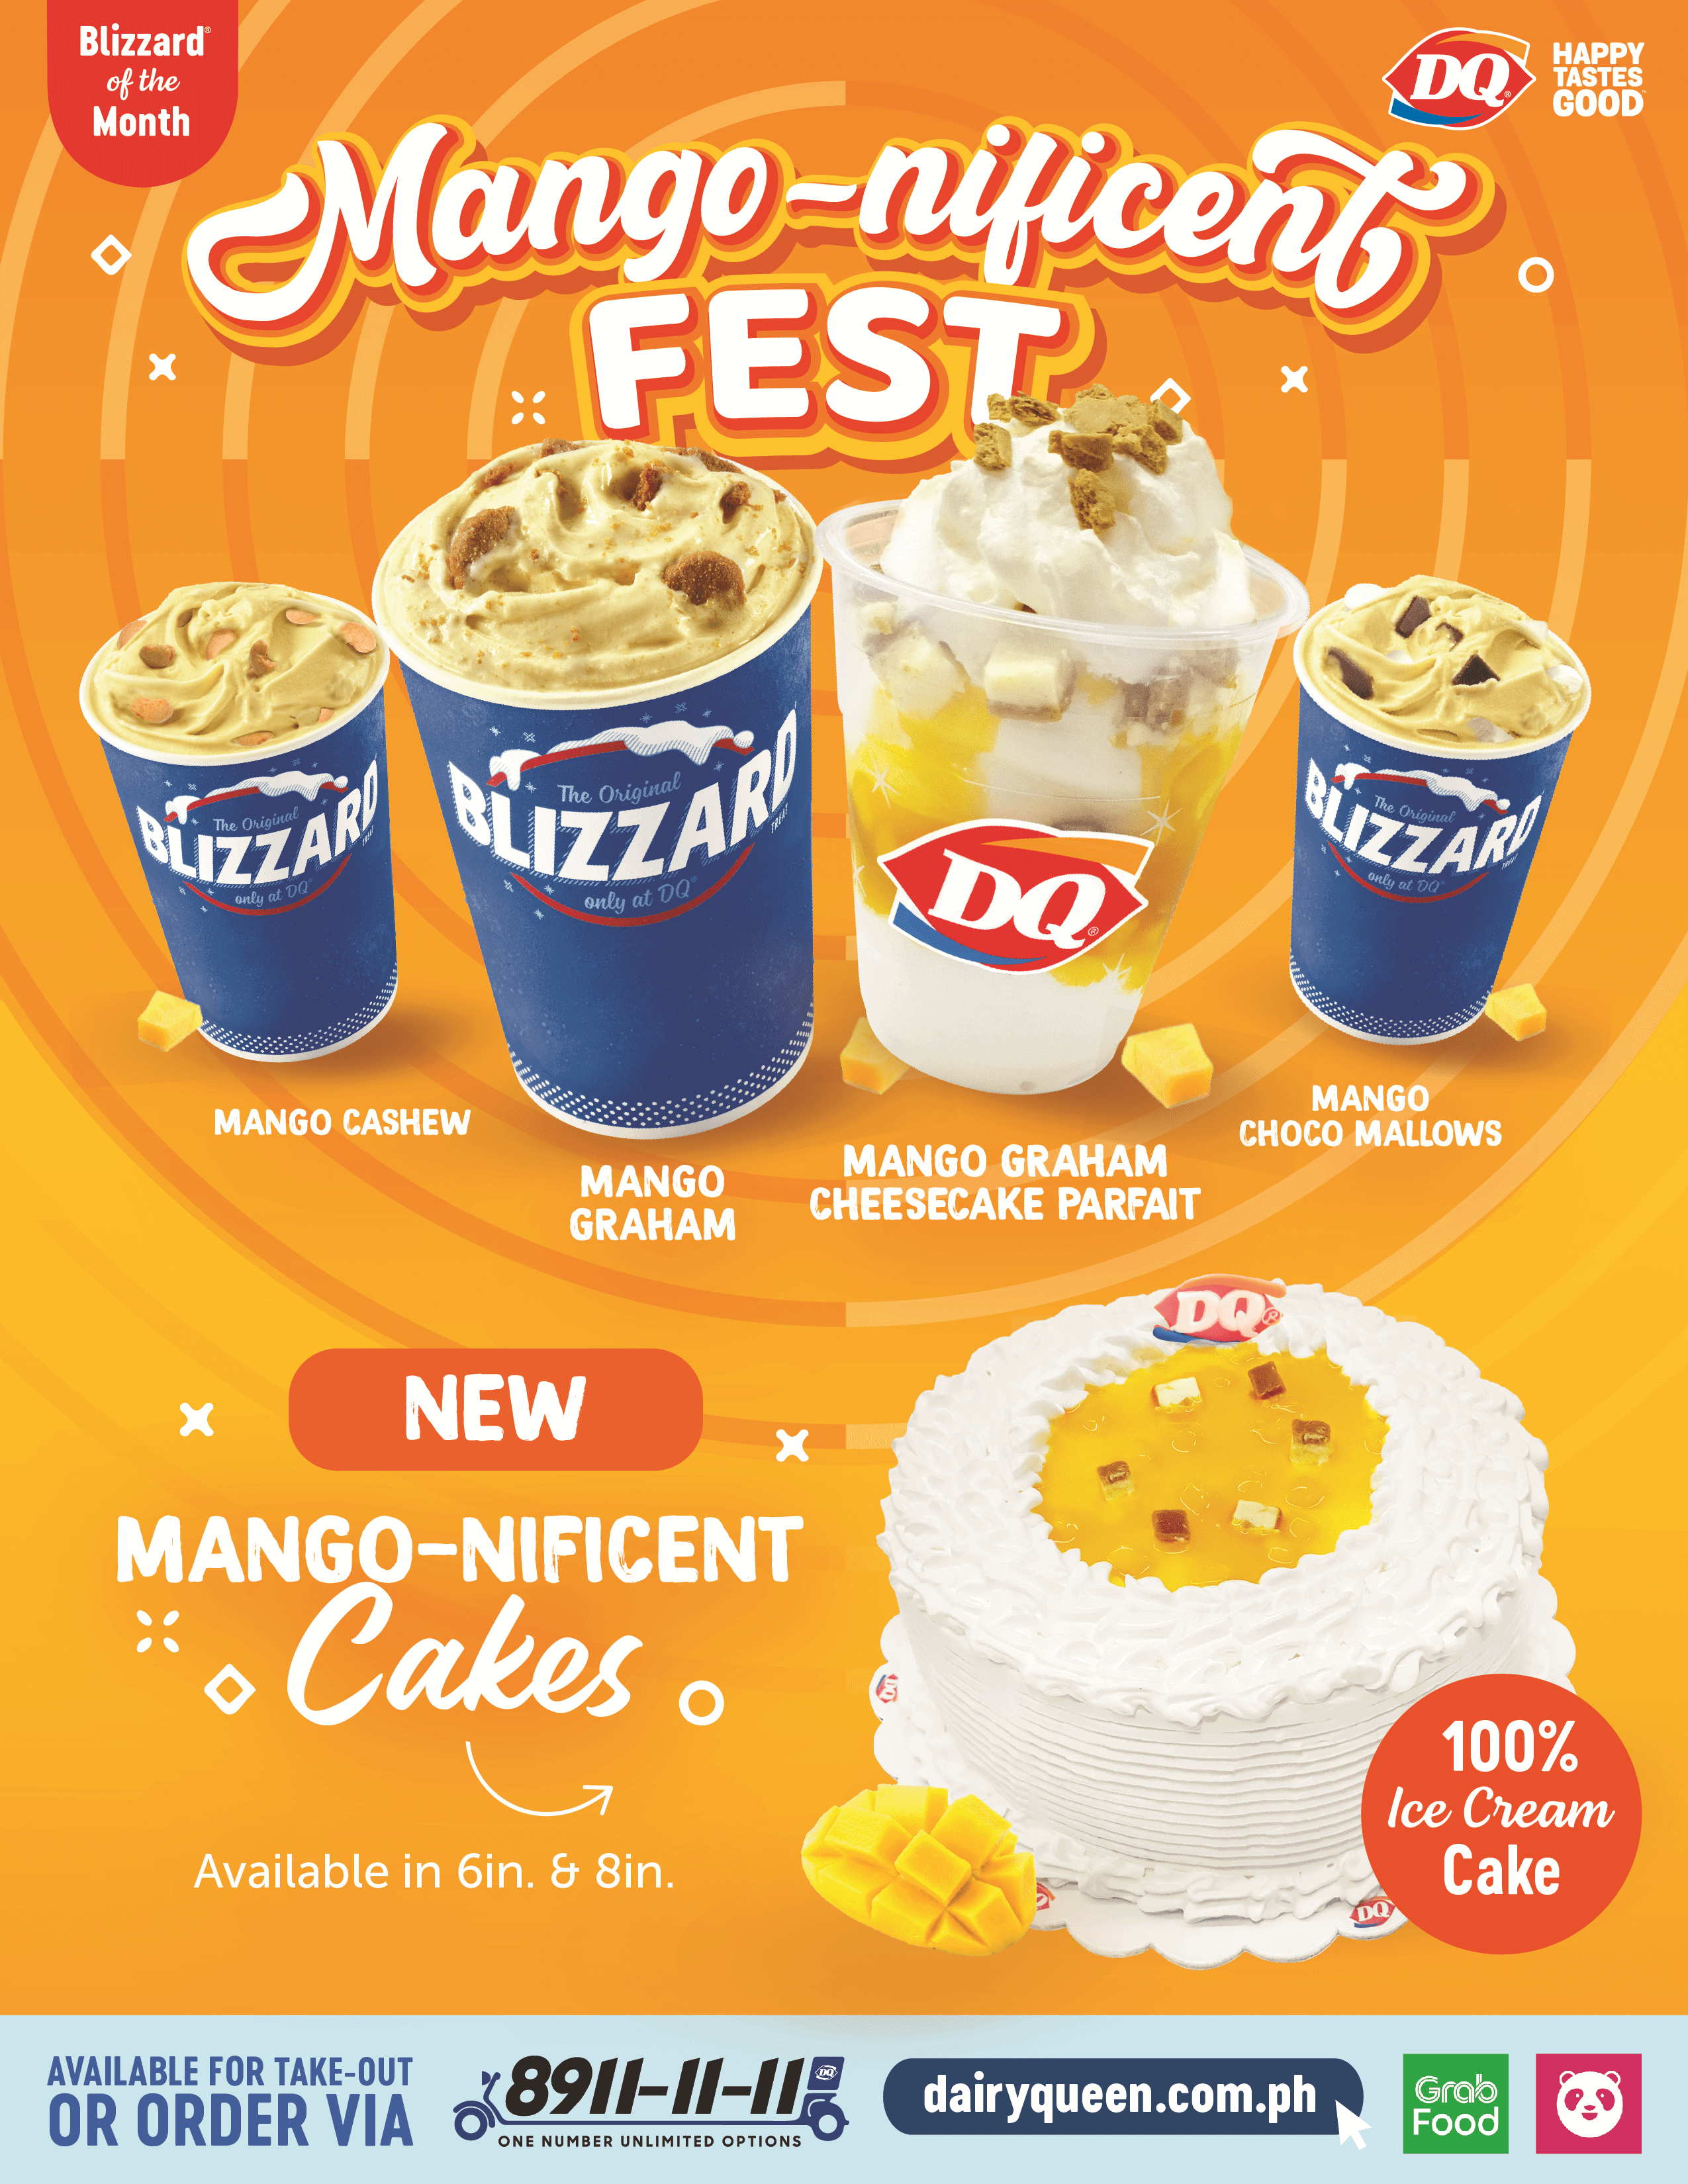 Dairy Queen offers new mango graham blizzard, mango-themed treats